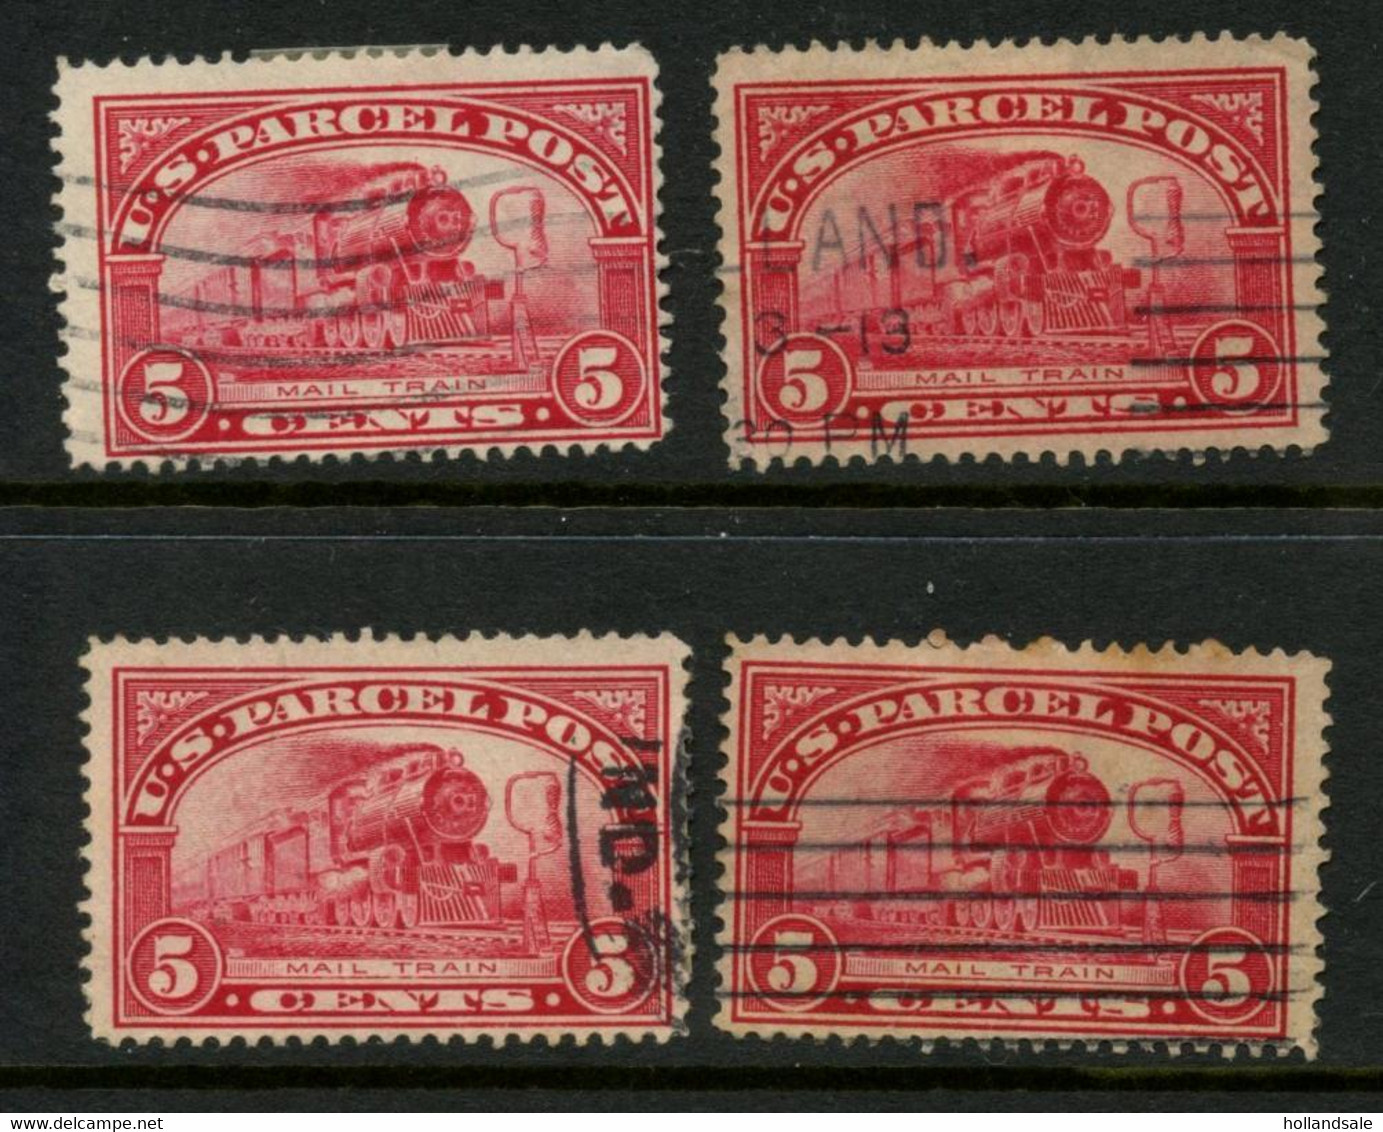 U.S.A. - 1913  5c Parcel Post Stamps. Five (5) Stamps. Used. SCOTT # PP5. - Parcel Post & Special Handling